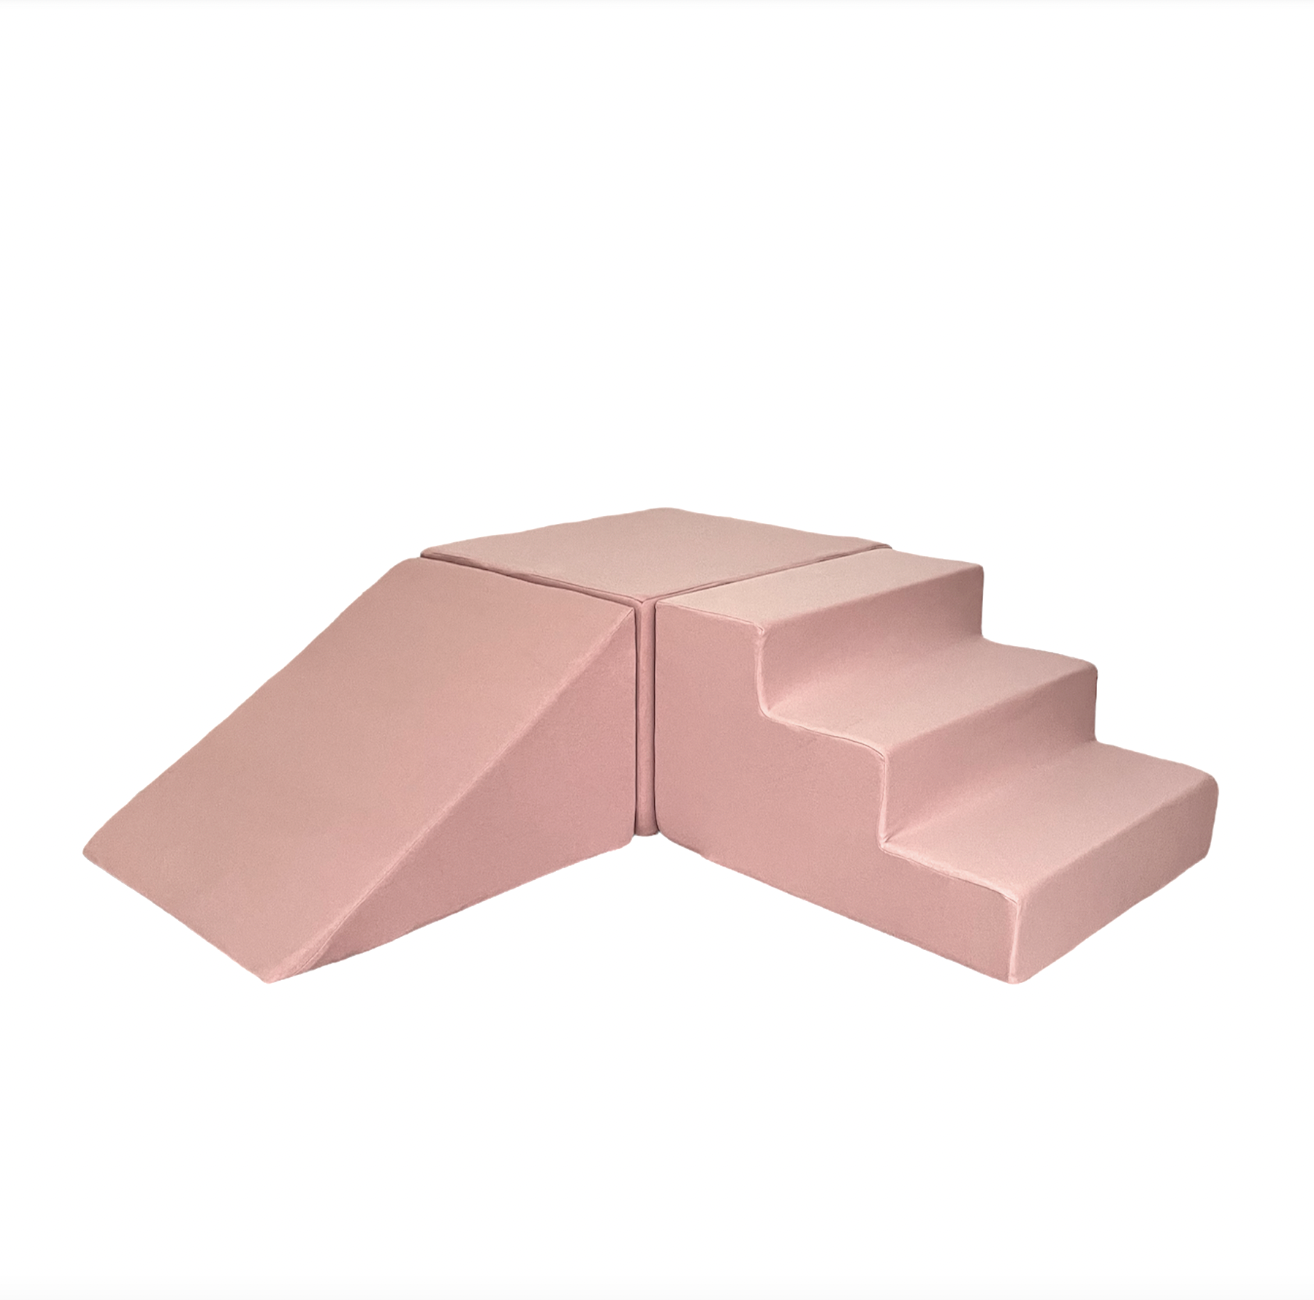 3 Piece Foam Playset, Pink